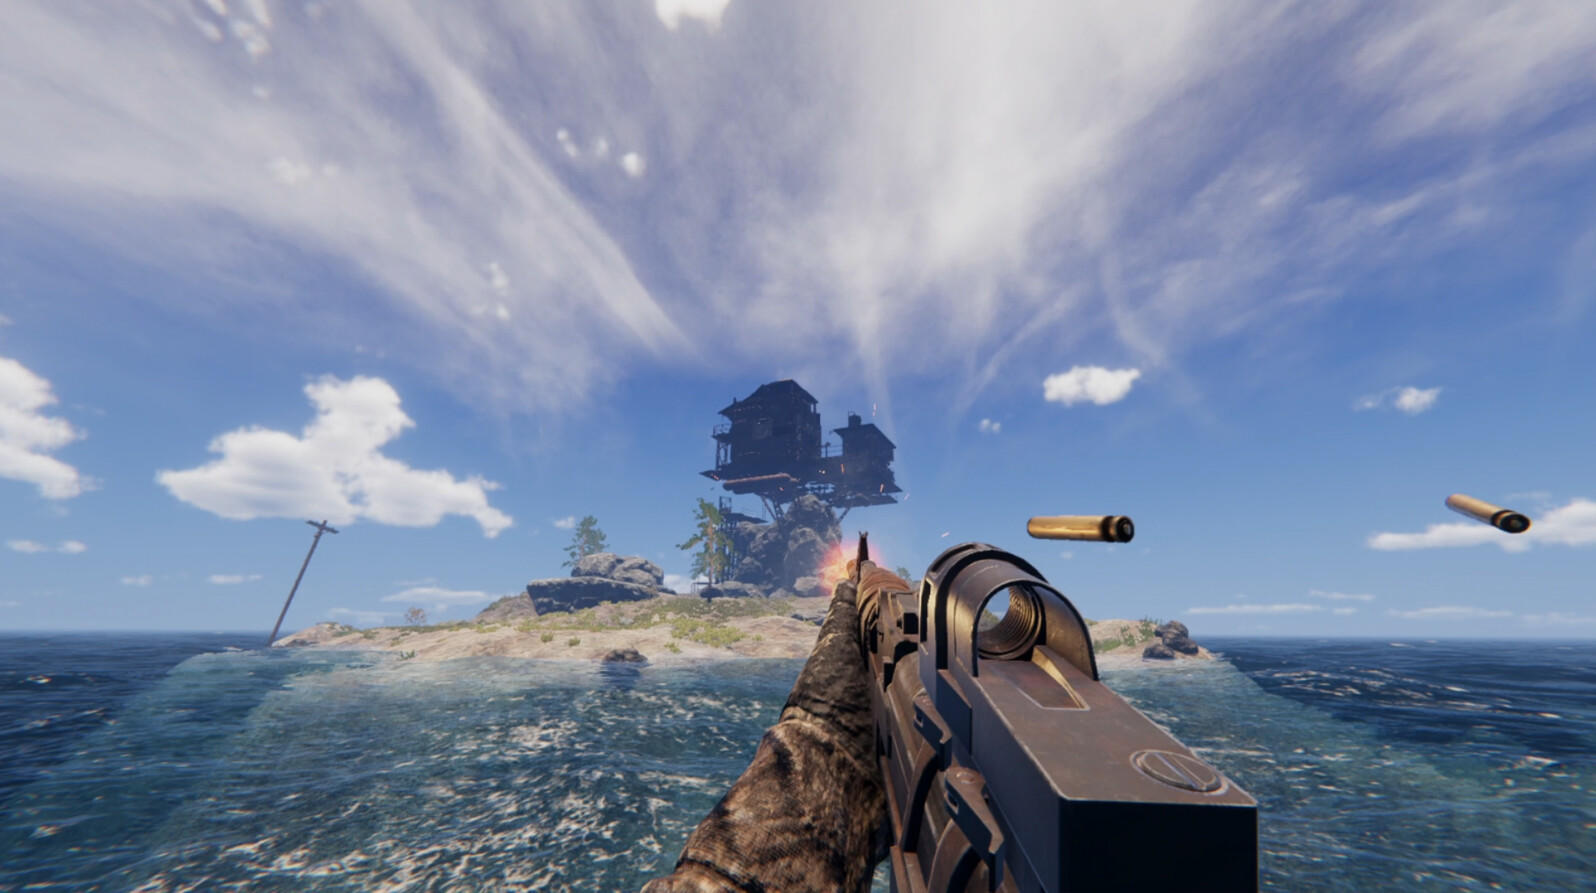 Sunkenland screenshot game